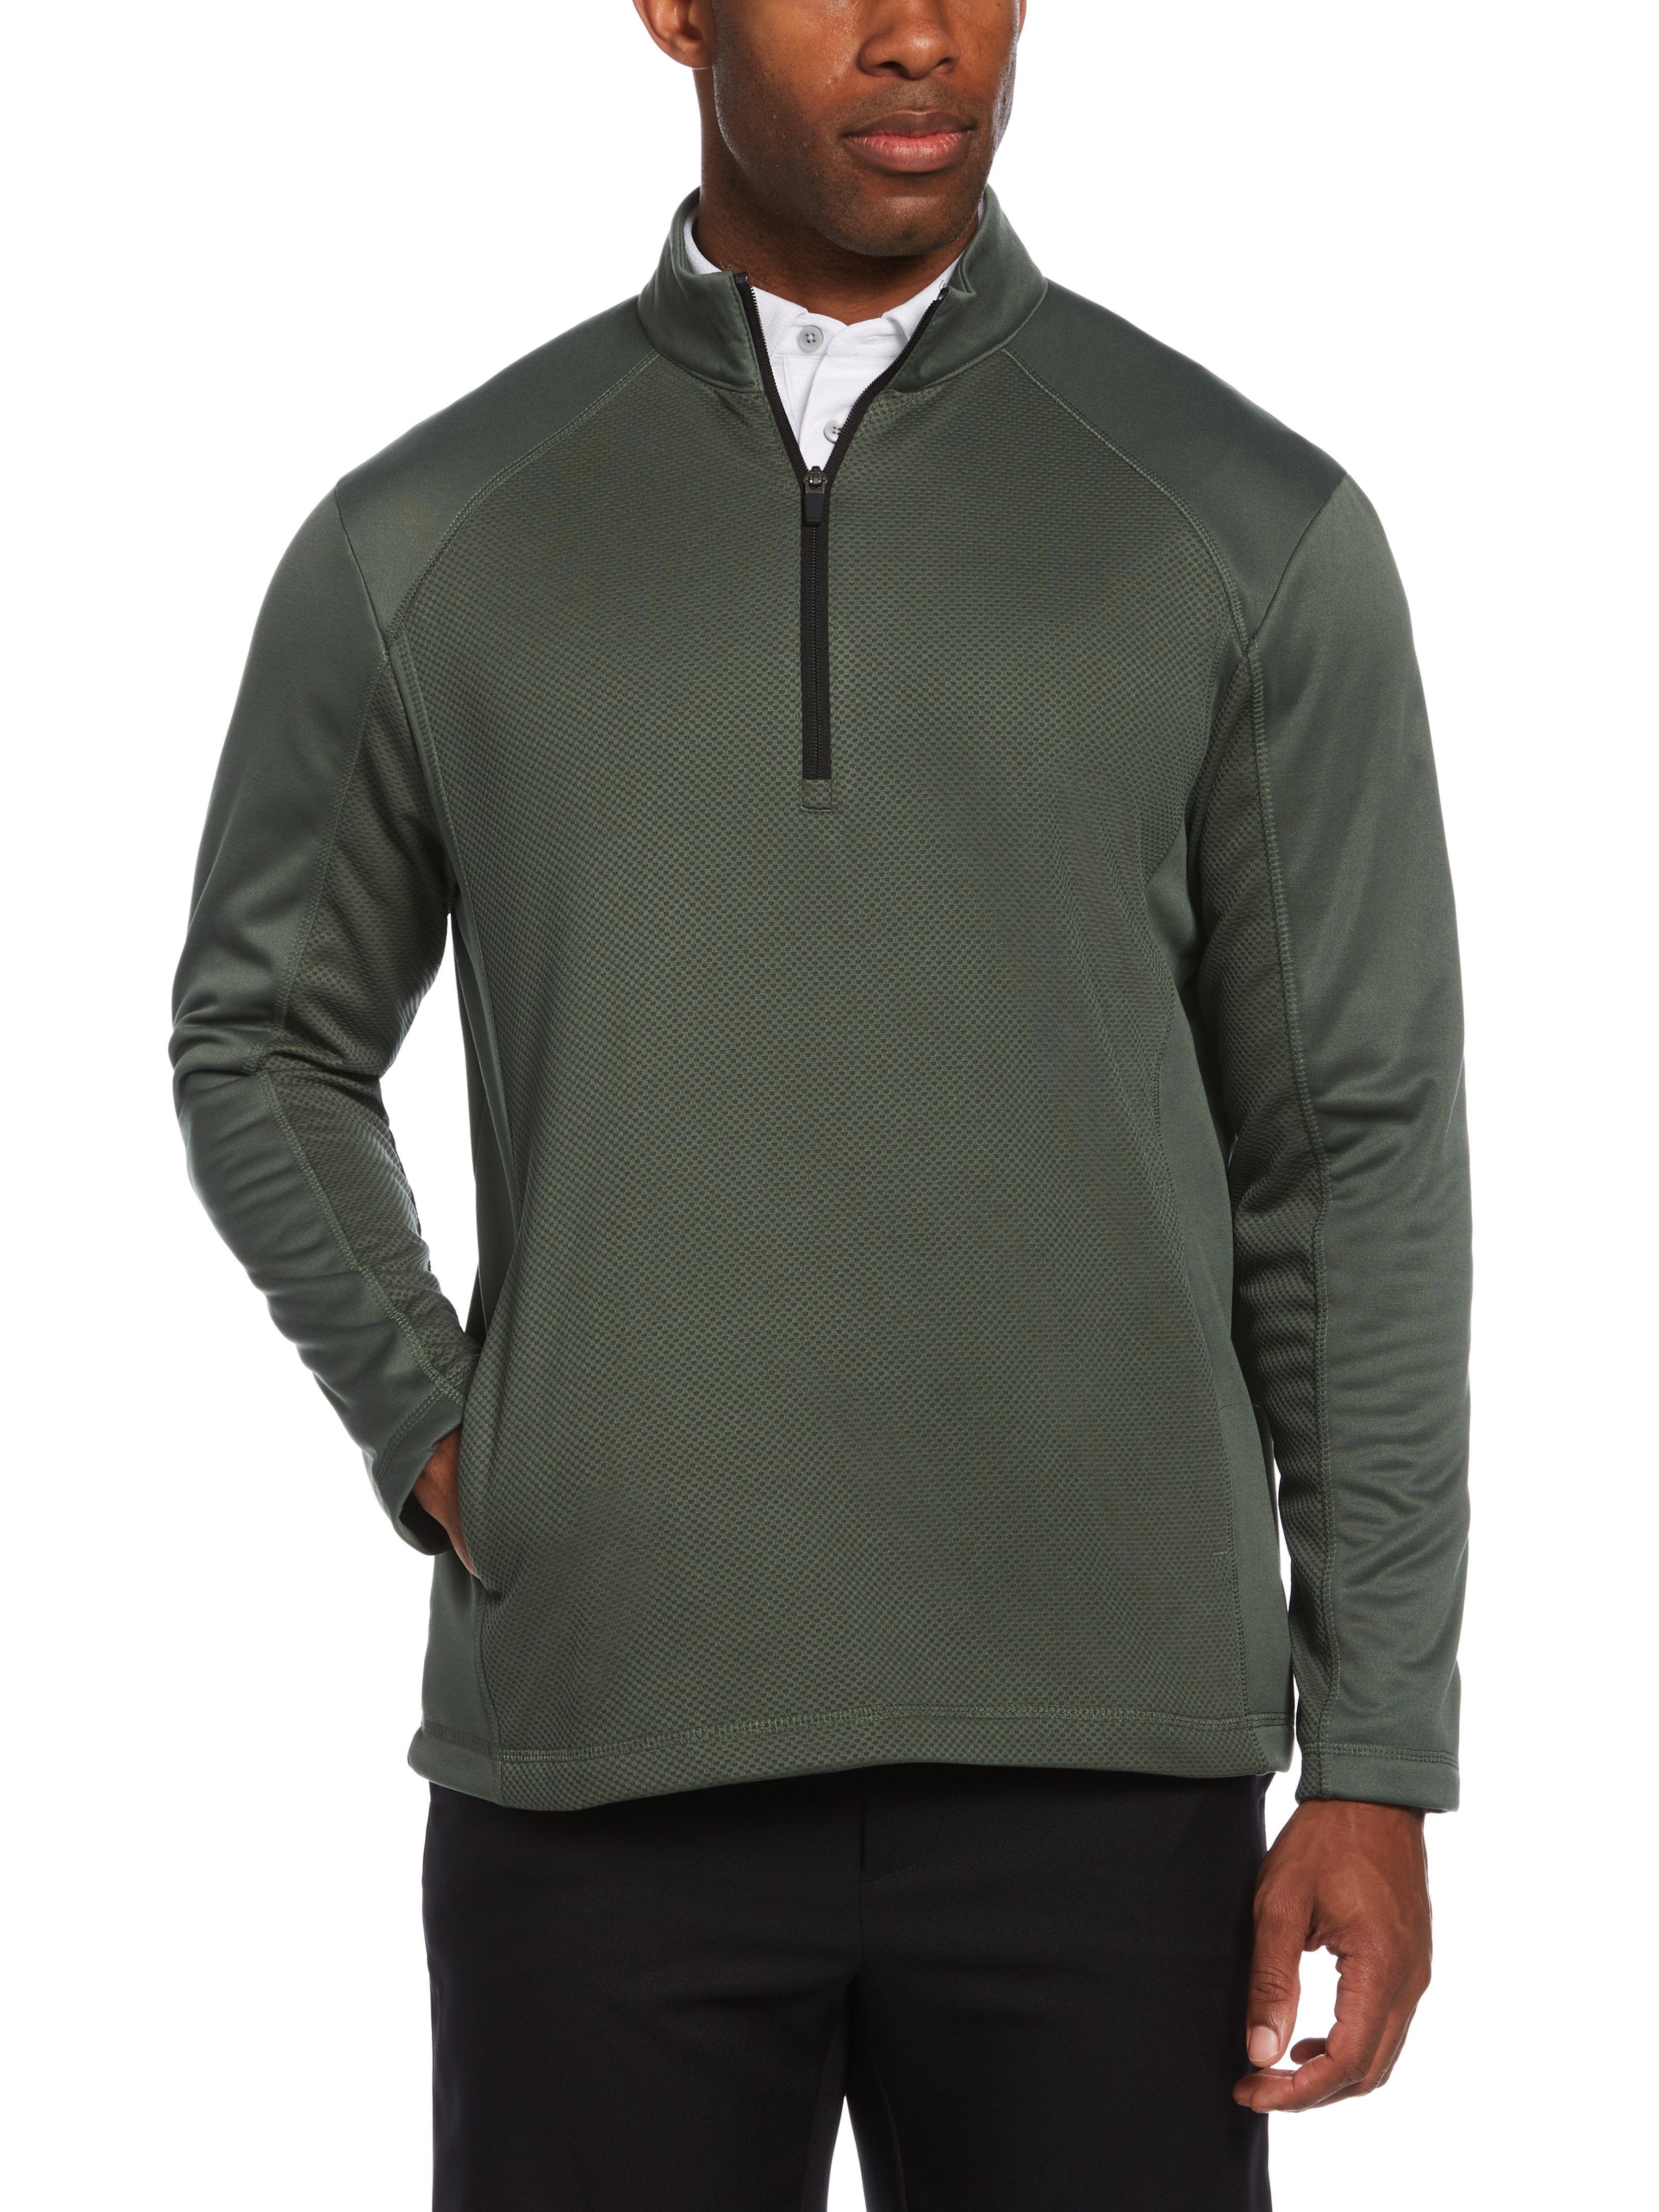 PGA TOUR Apparel Mens Mixed Texture Fleece 1/4 Zip Golf Jacket Top, Size Medium, Duck Green, 100% Polyester | Golf Apparel Shop